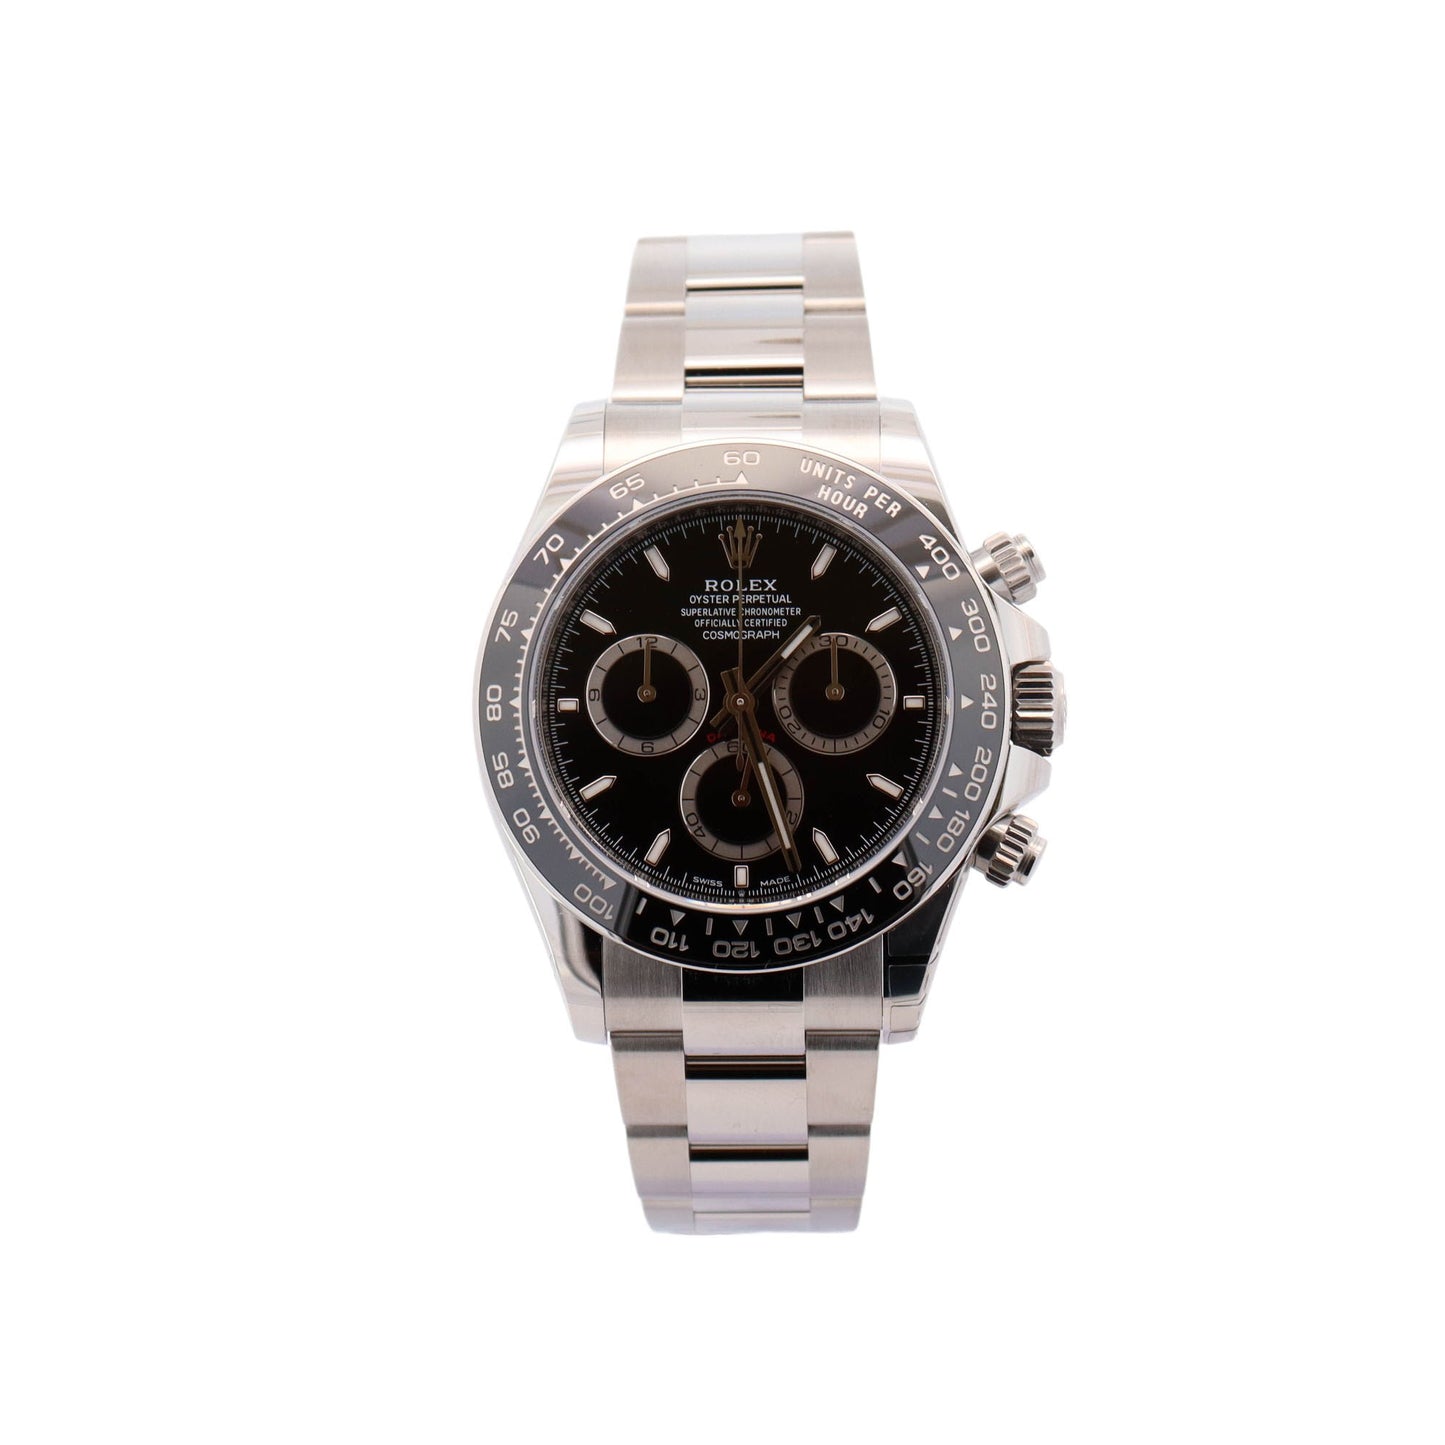 Rolex Daytona Stainless Steel 40mm Black Chronograph Dial Watch Reference# 126500LN - Happy Jewelers Fine Jewelry Lifetime Warranty